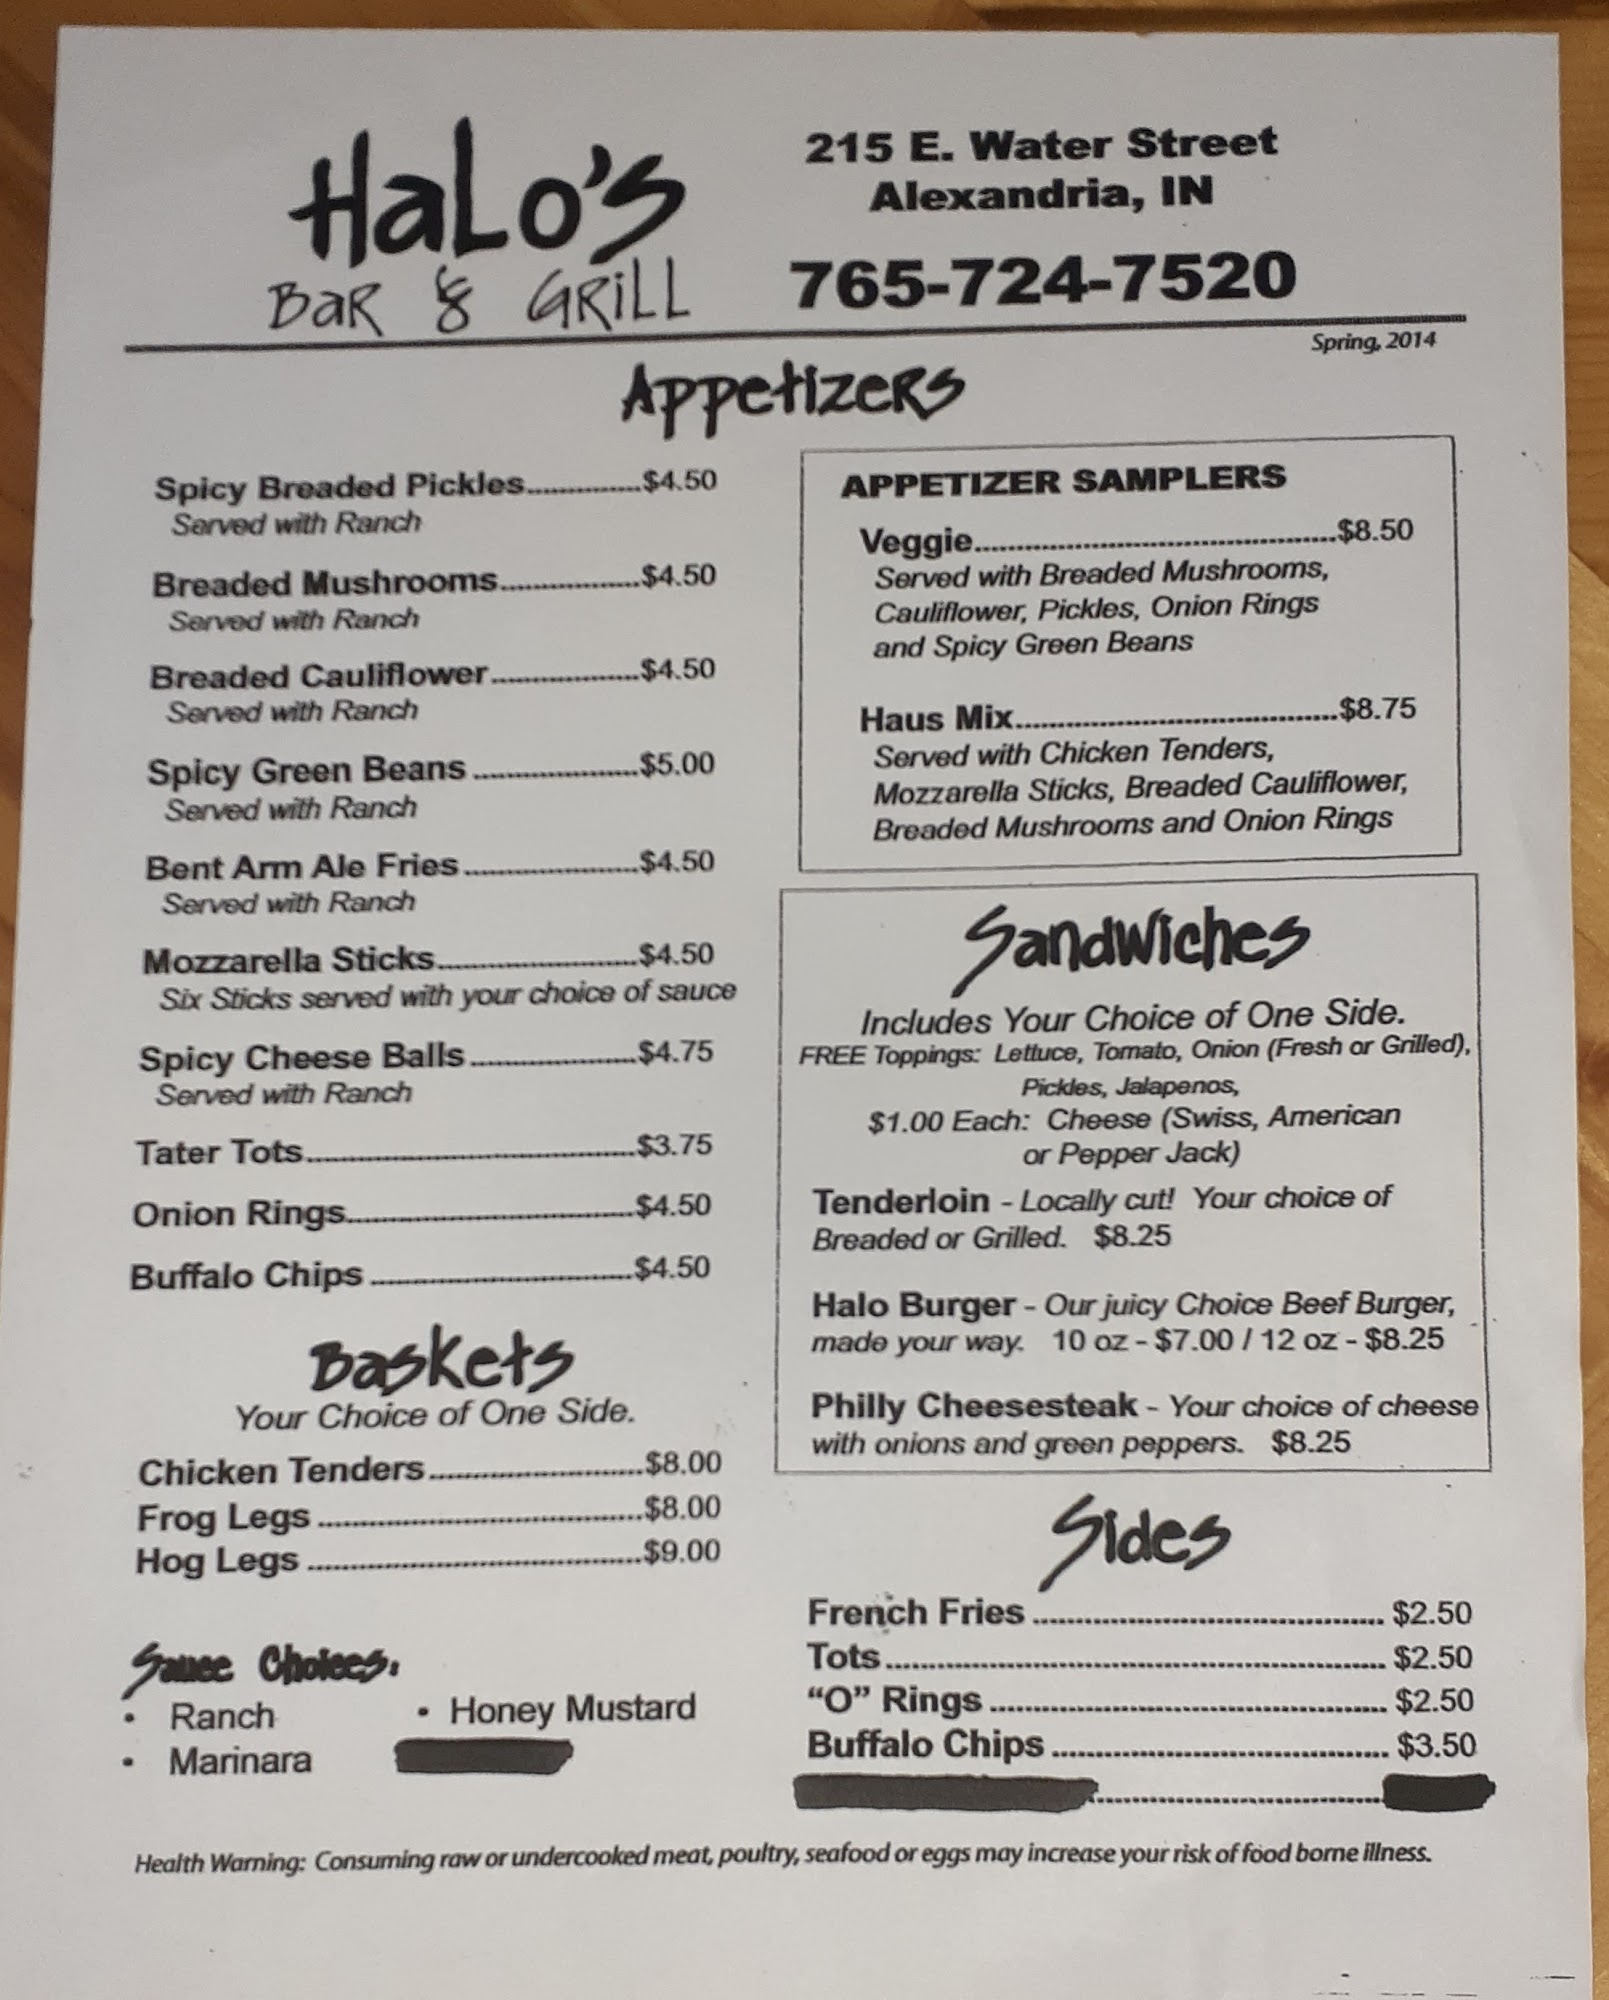 Halo's Bar & Grill